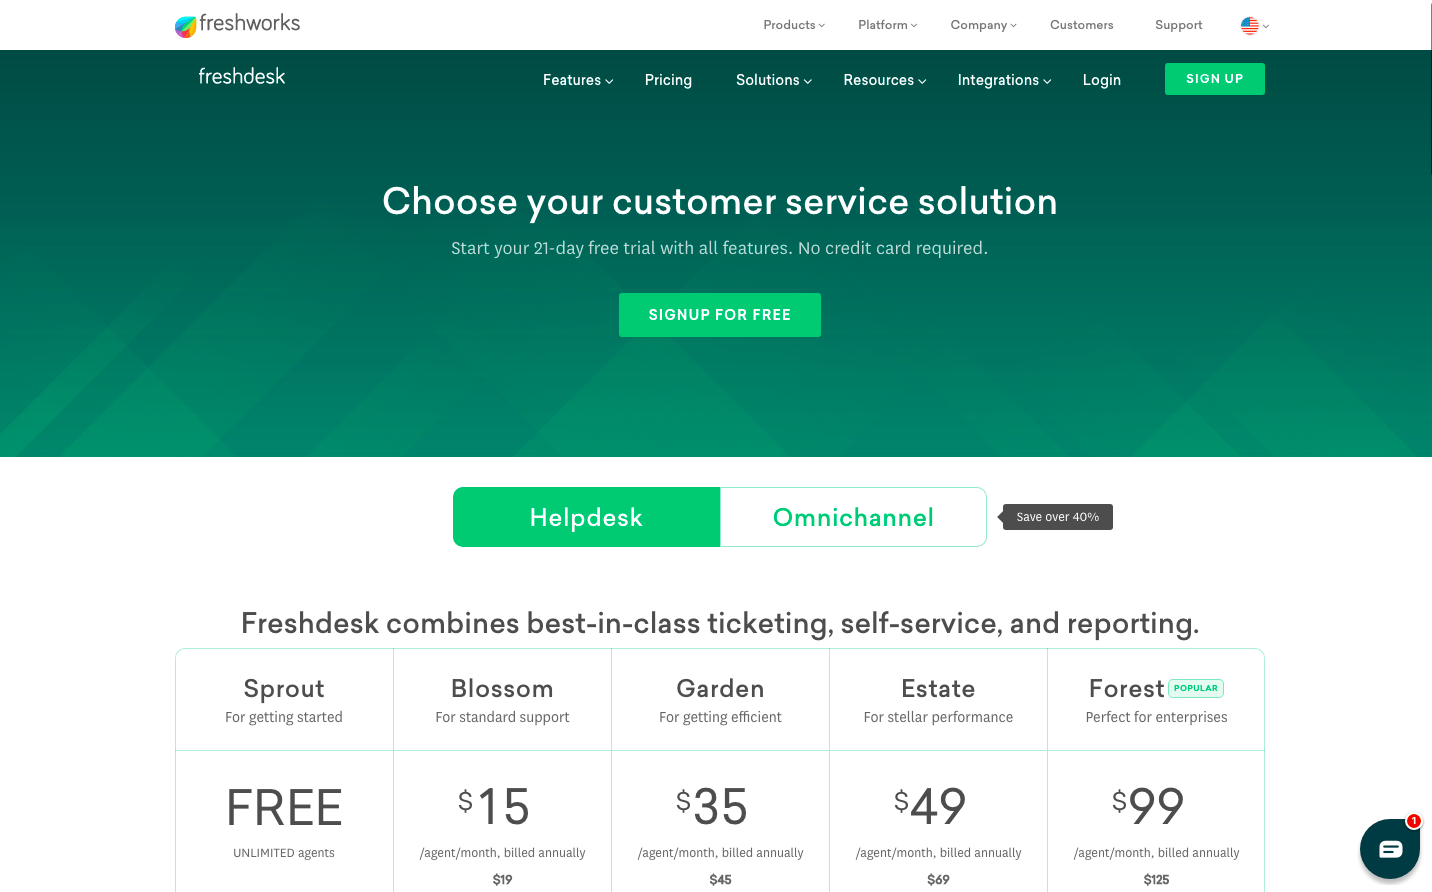 Freshdesk customer service software